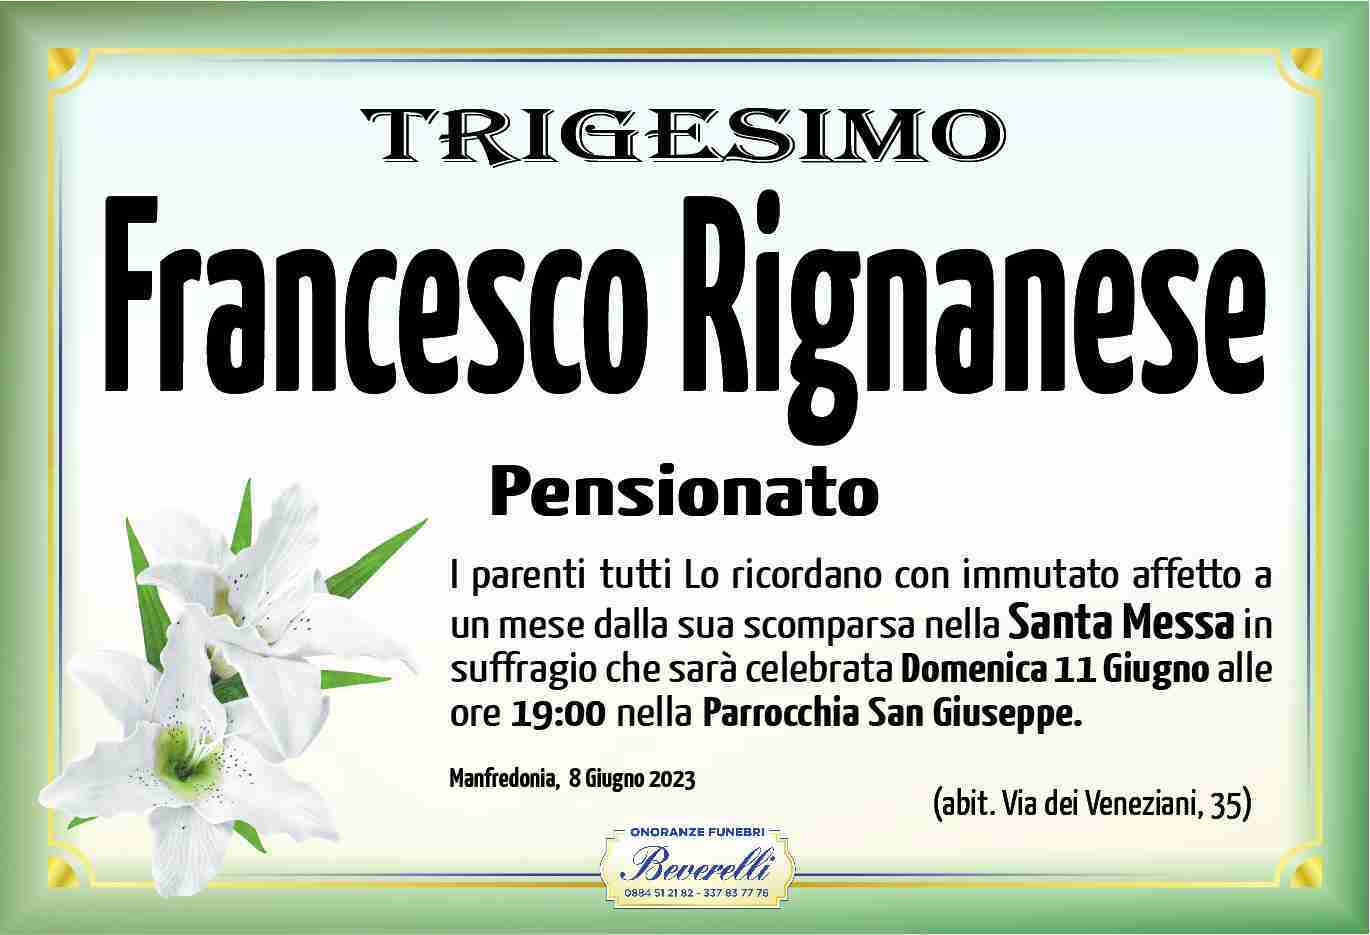 Francesco Rignanese